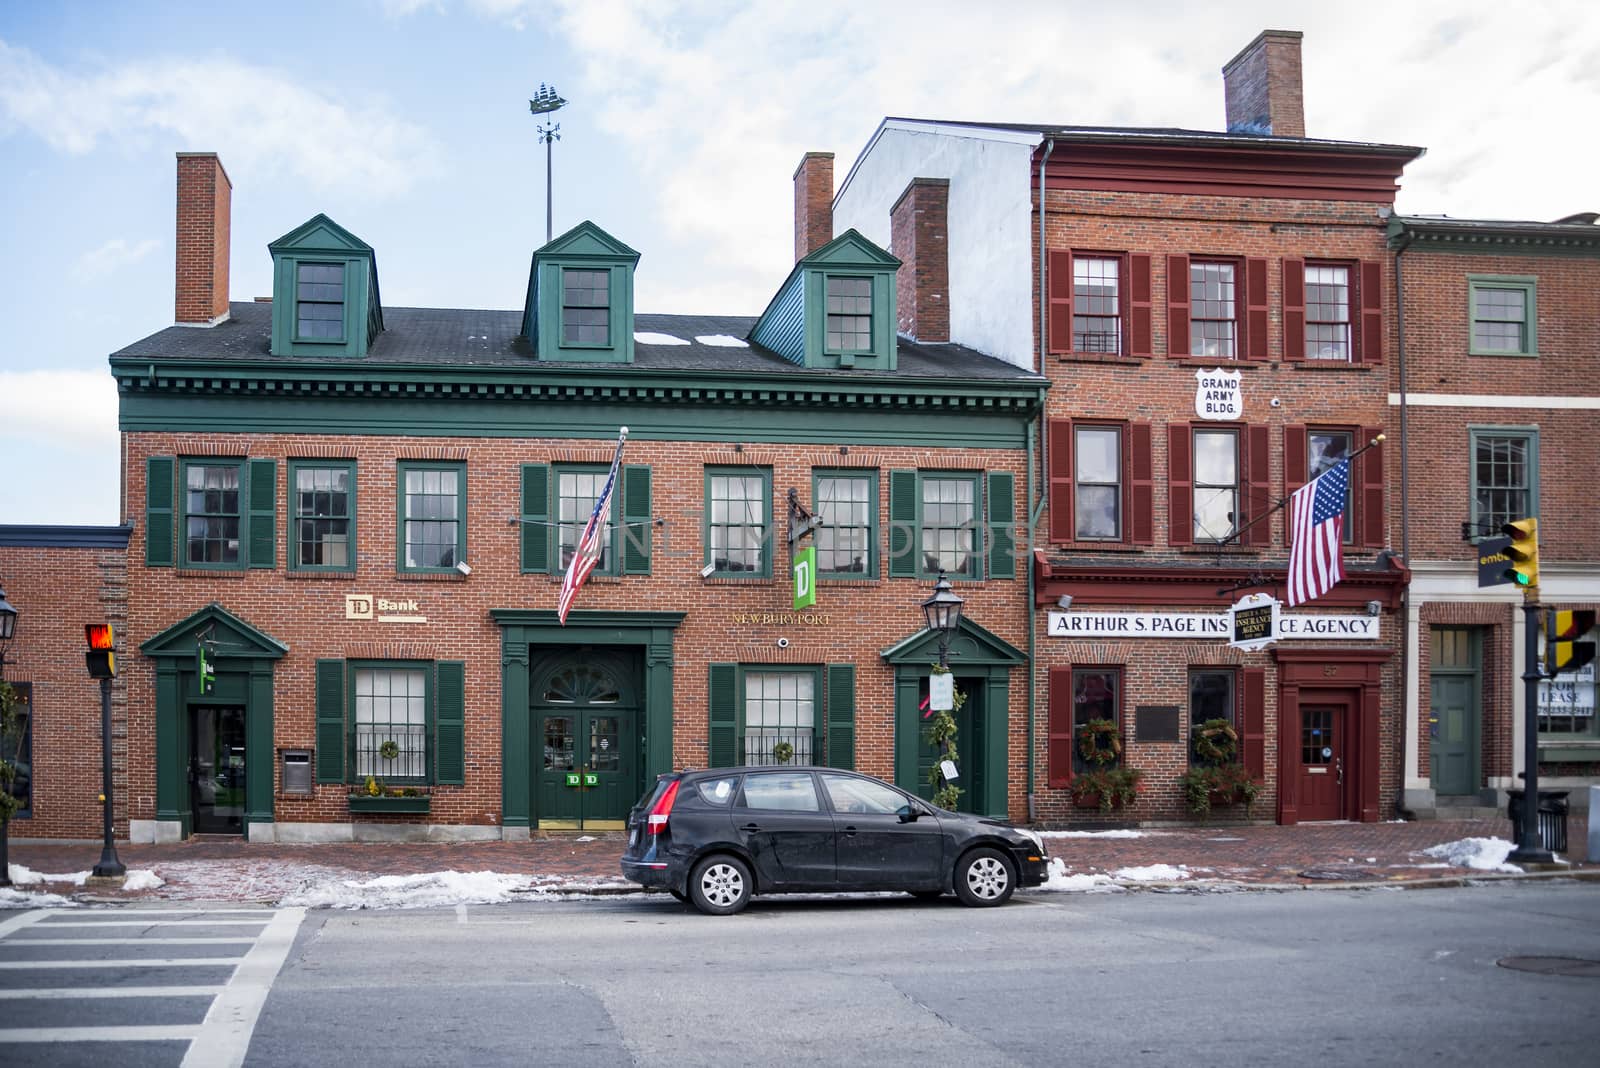 Newburyport, historic city in Essex County, Massachusetts by edella